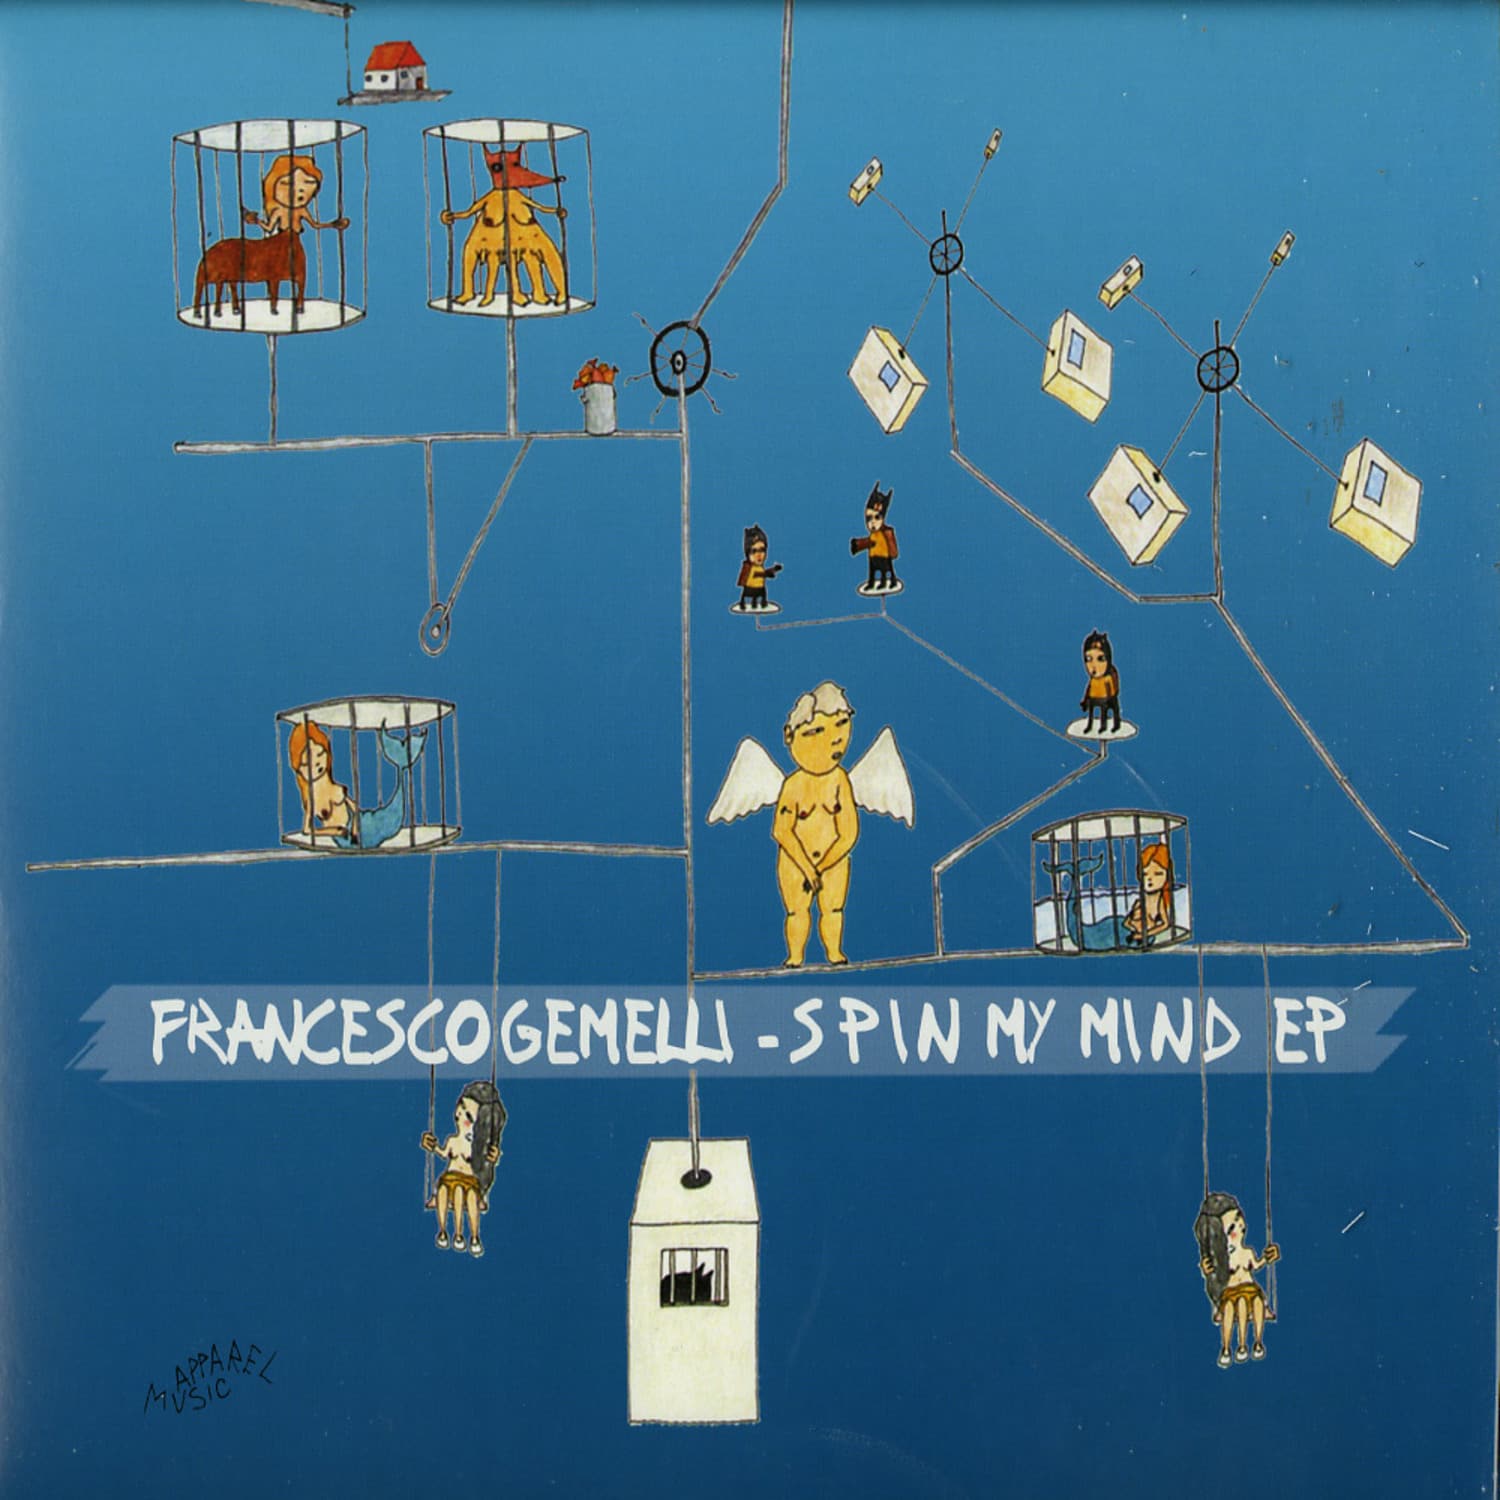 Francesco Gemelli - SPIN MY MIND EP